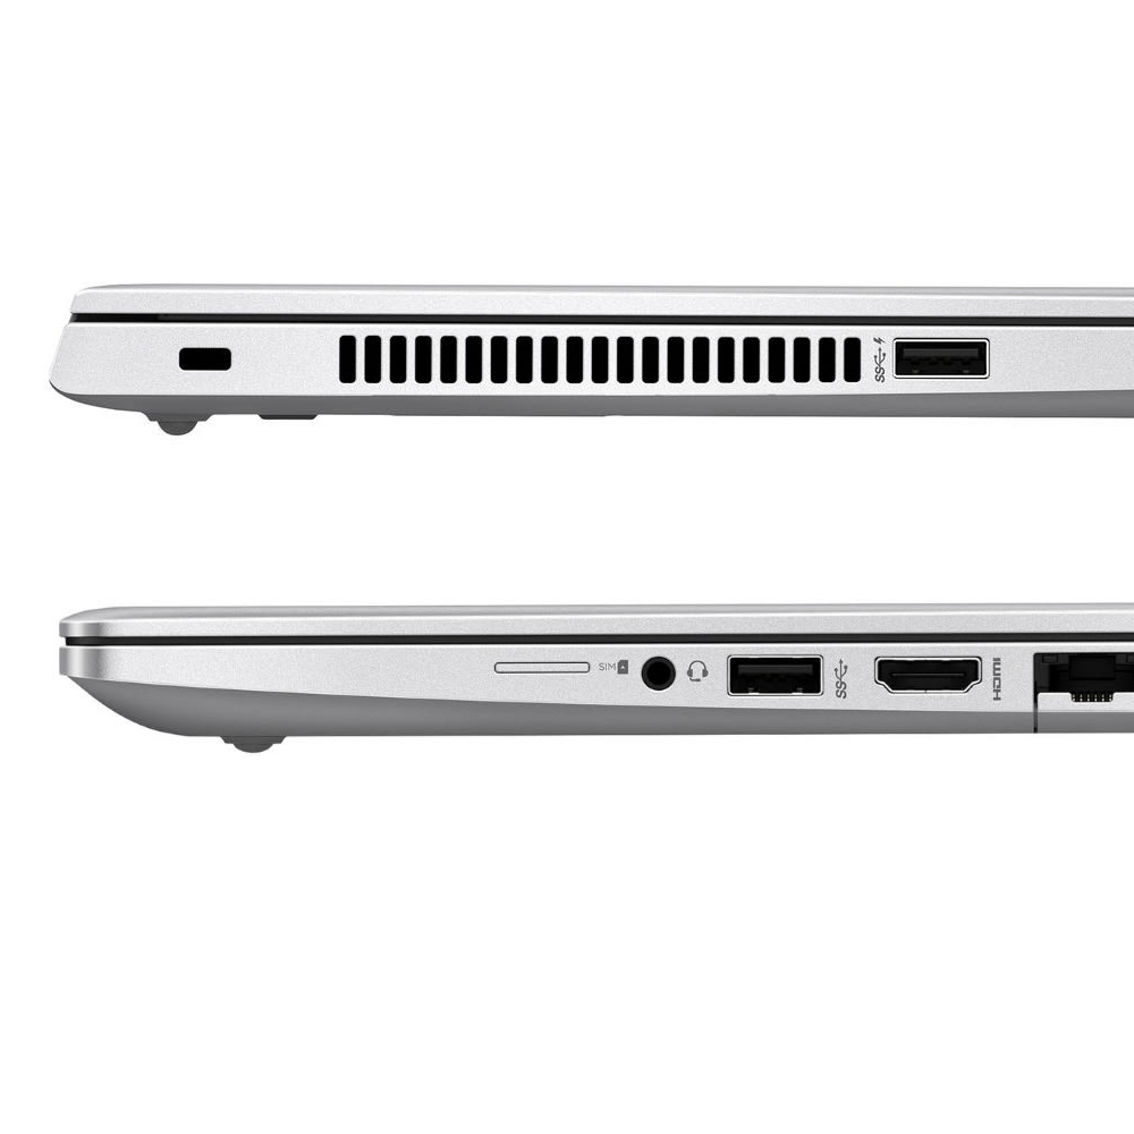 HP 830 G6 Core i7-8665U 1.9GHz 16GB Ram 256GB SSD Laptop (Refurbished) - Image 3 of 3